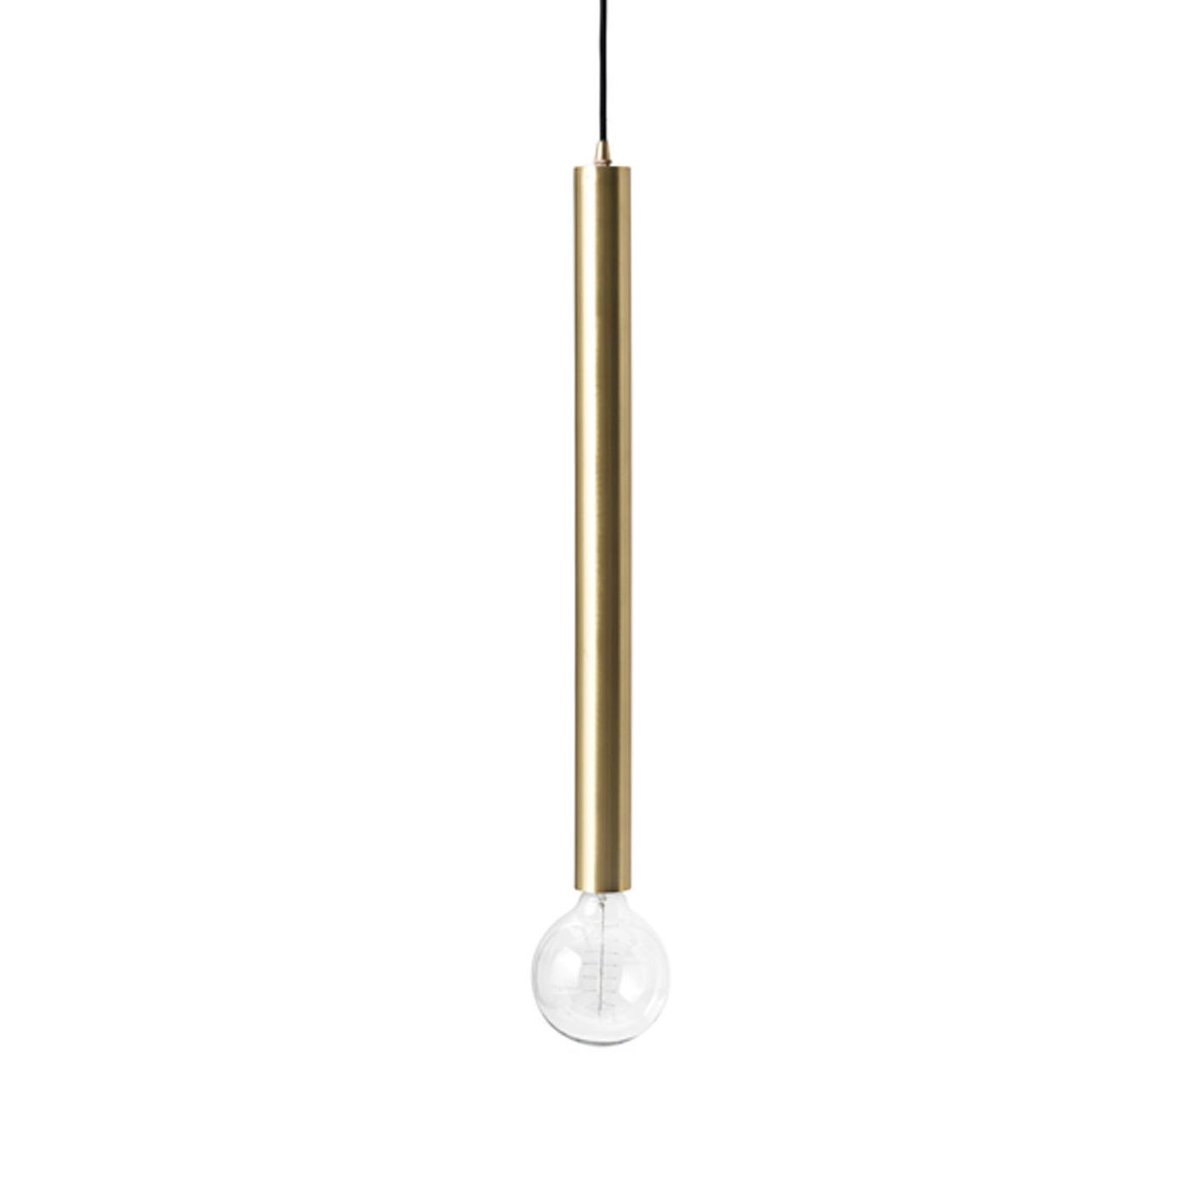 CO Bankeryd Long hanglamp messing - 45 cm.